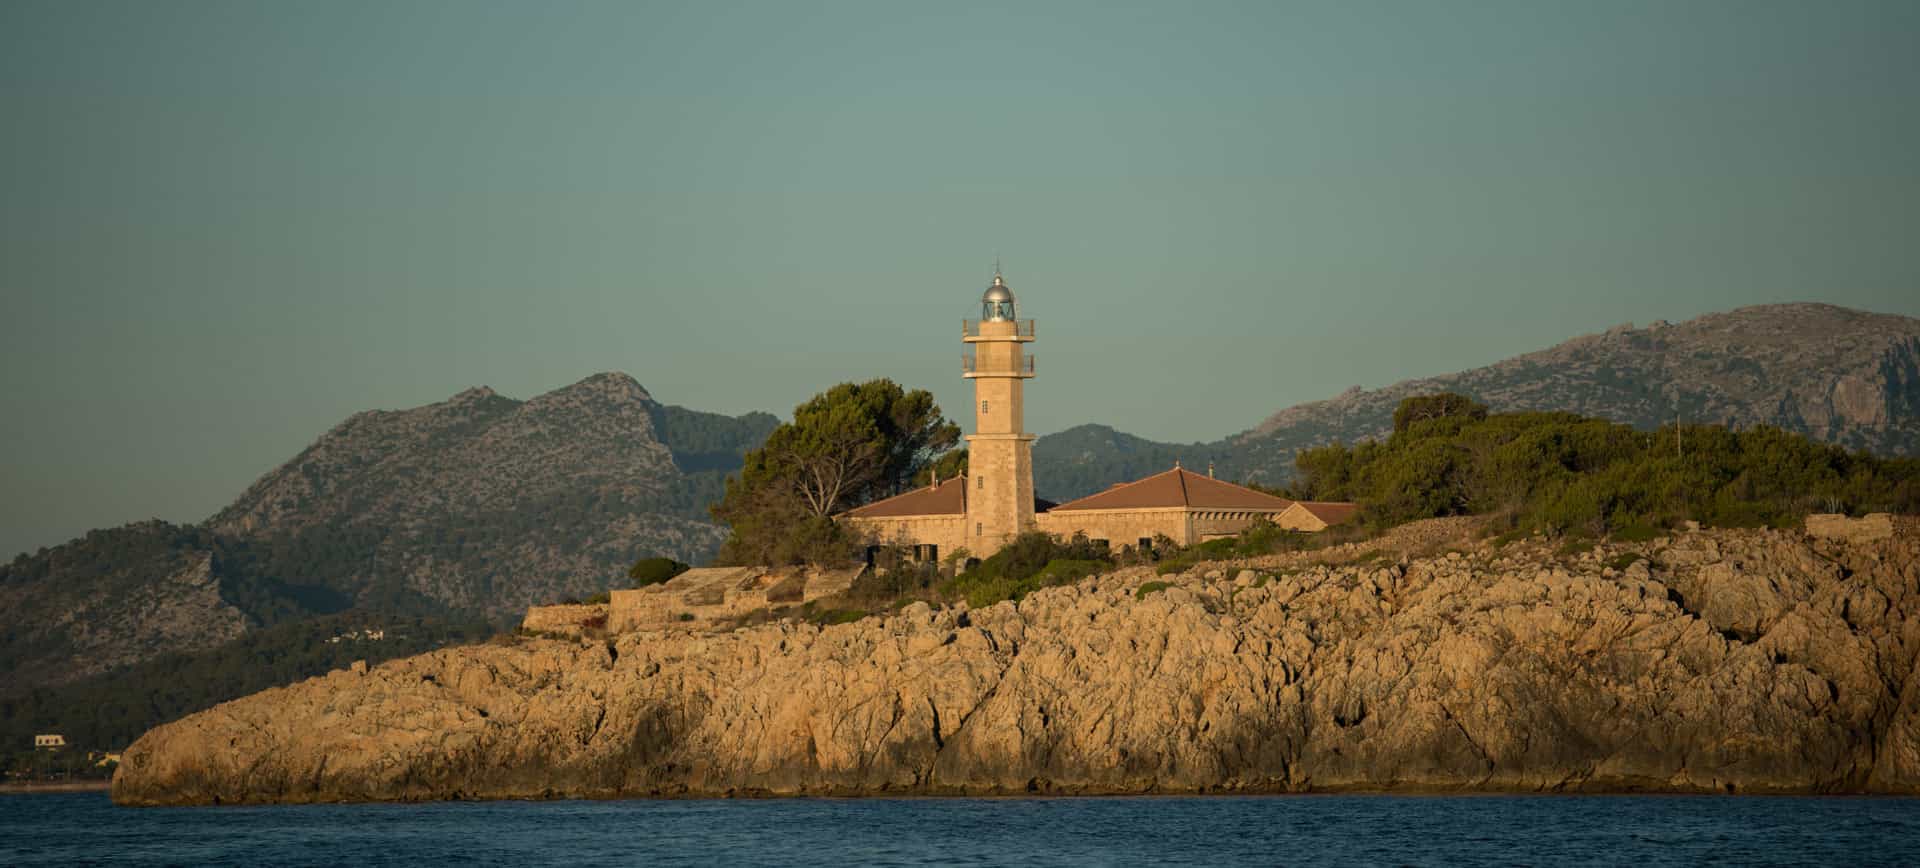 Punta de l'Avançada Lighthouse